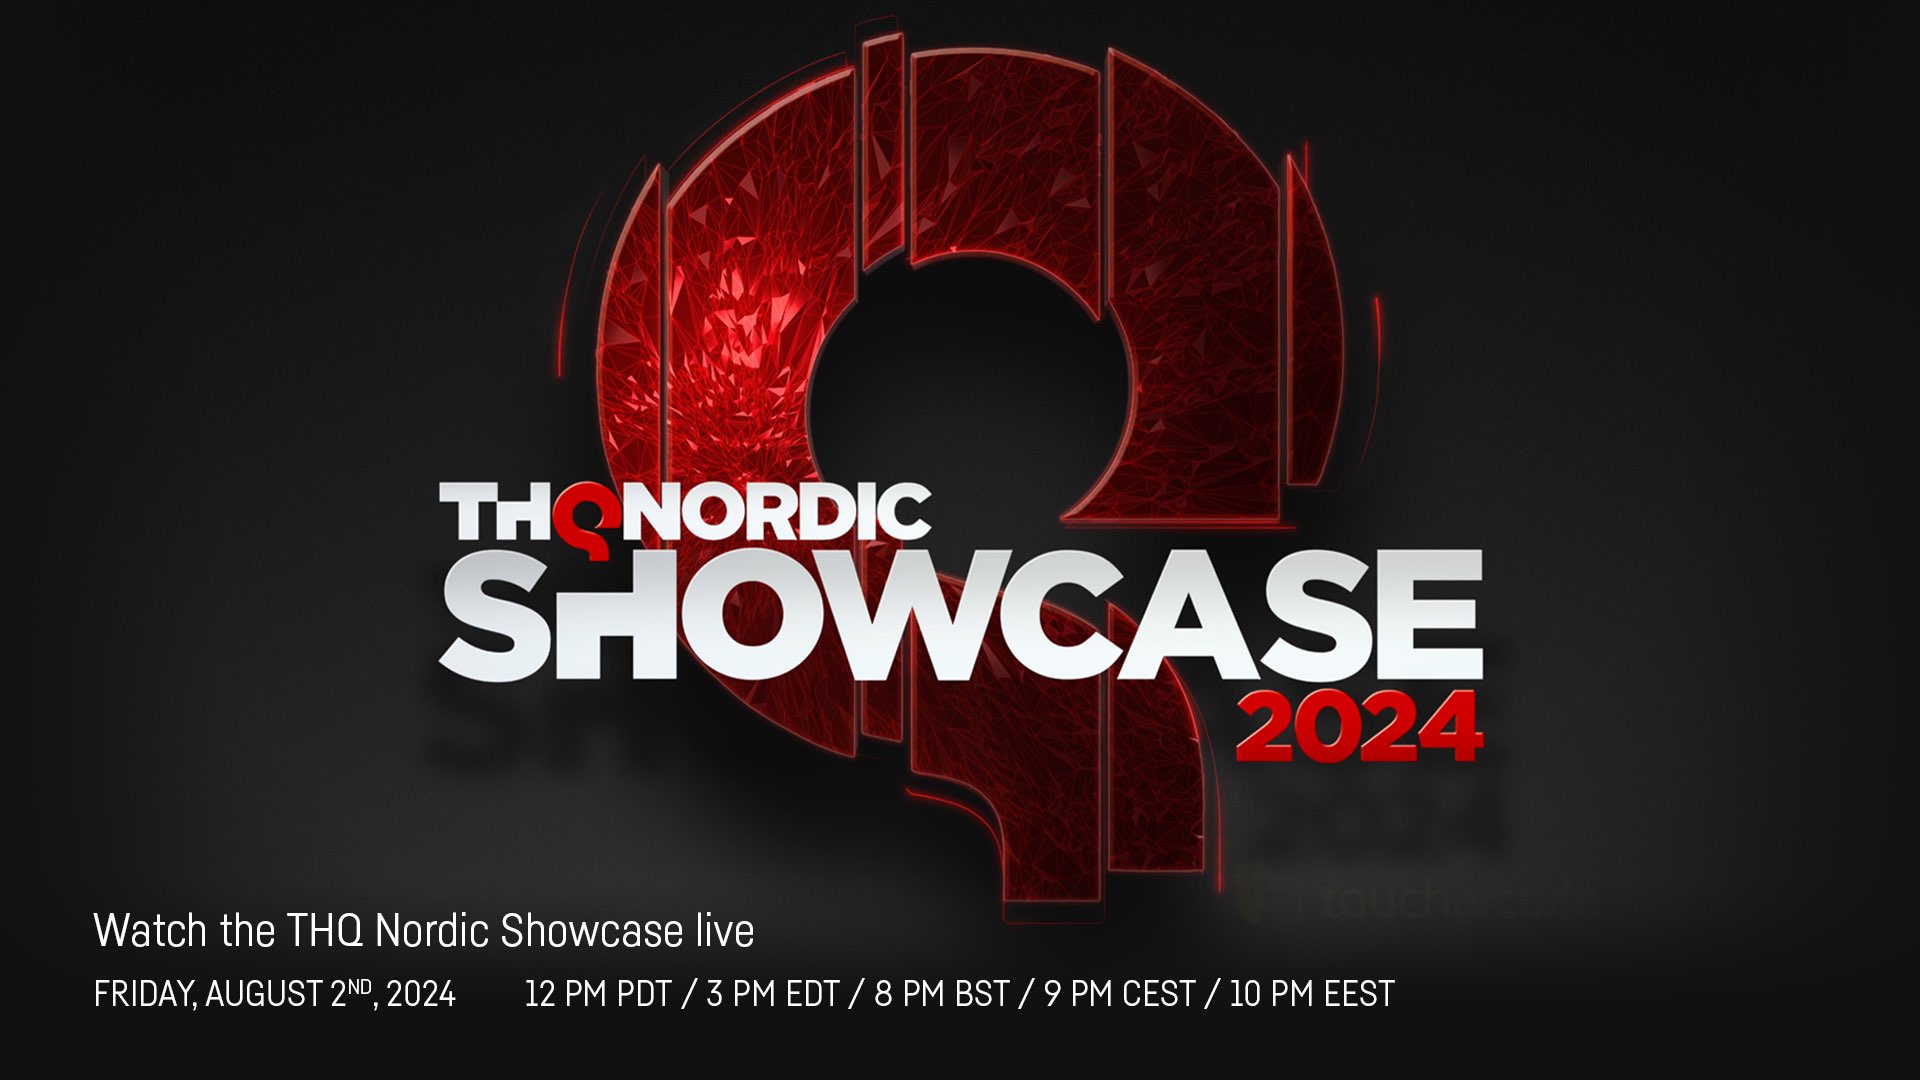 thq-nordic-showcase-2024-handygames-announcements.jpg